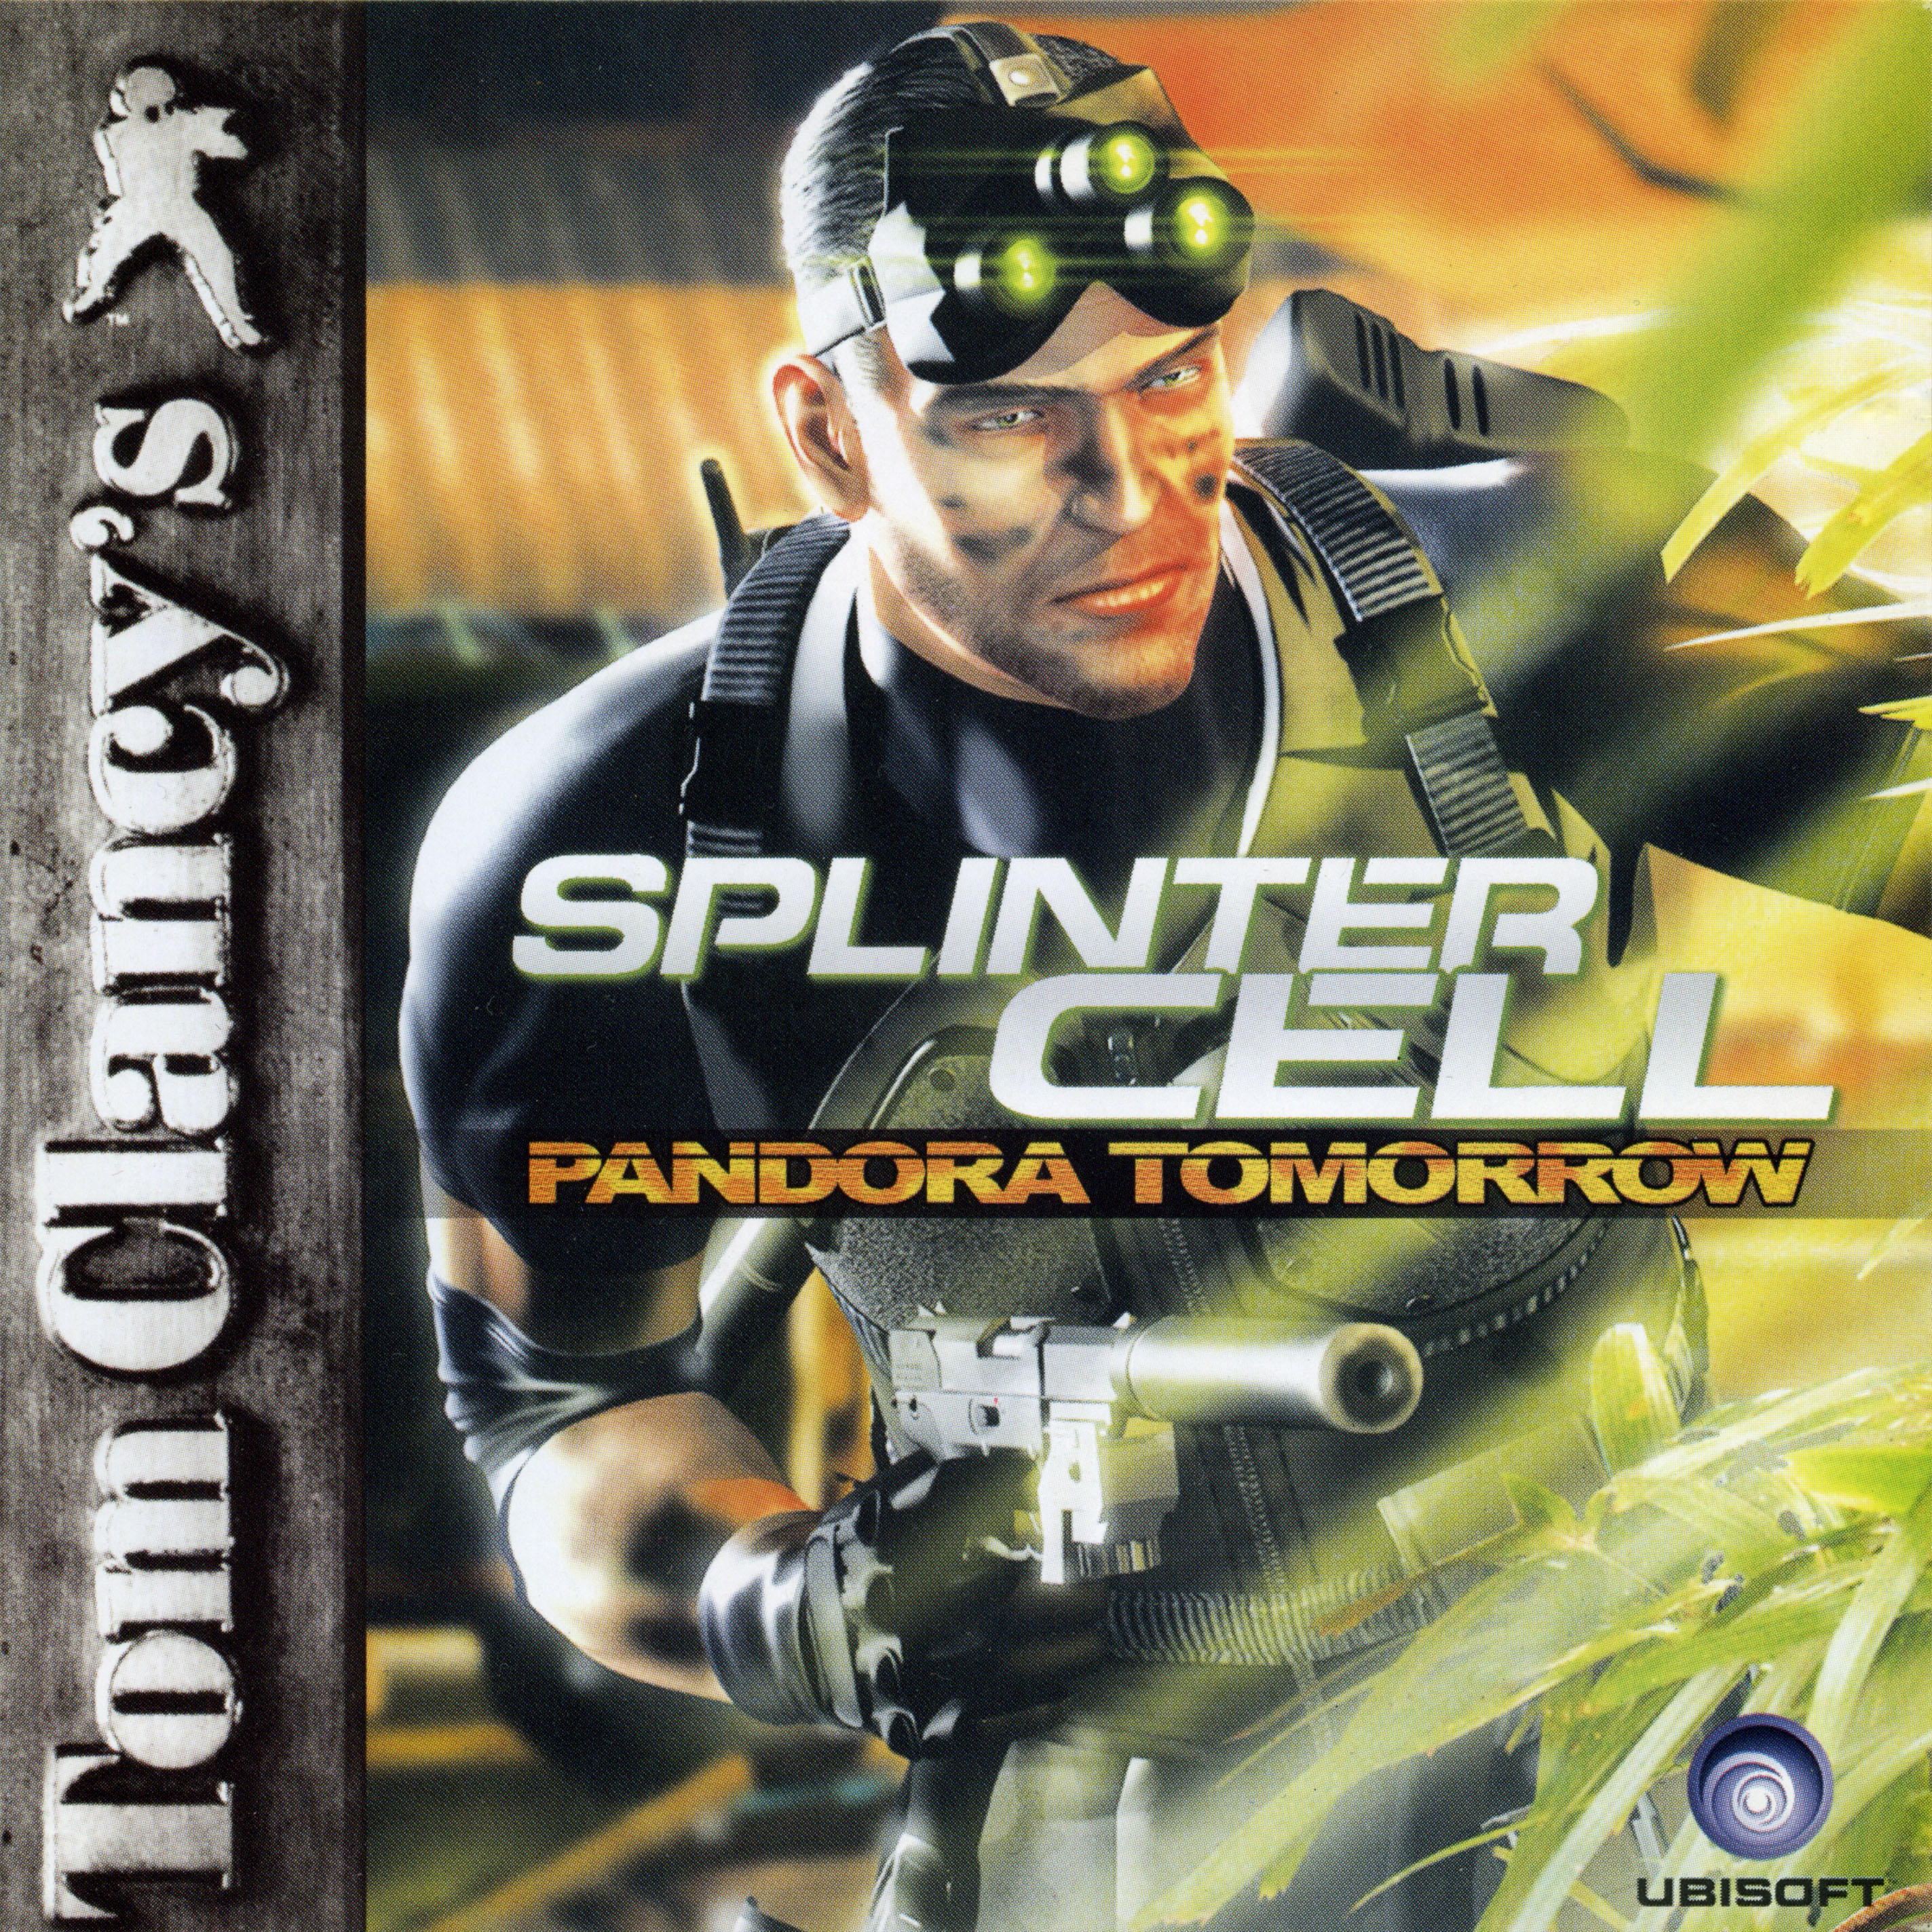 Splinter cell pandora tomorrow not on steam фото 41